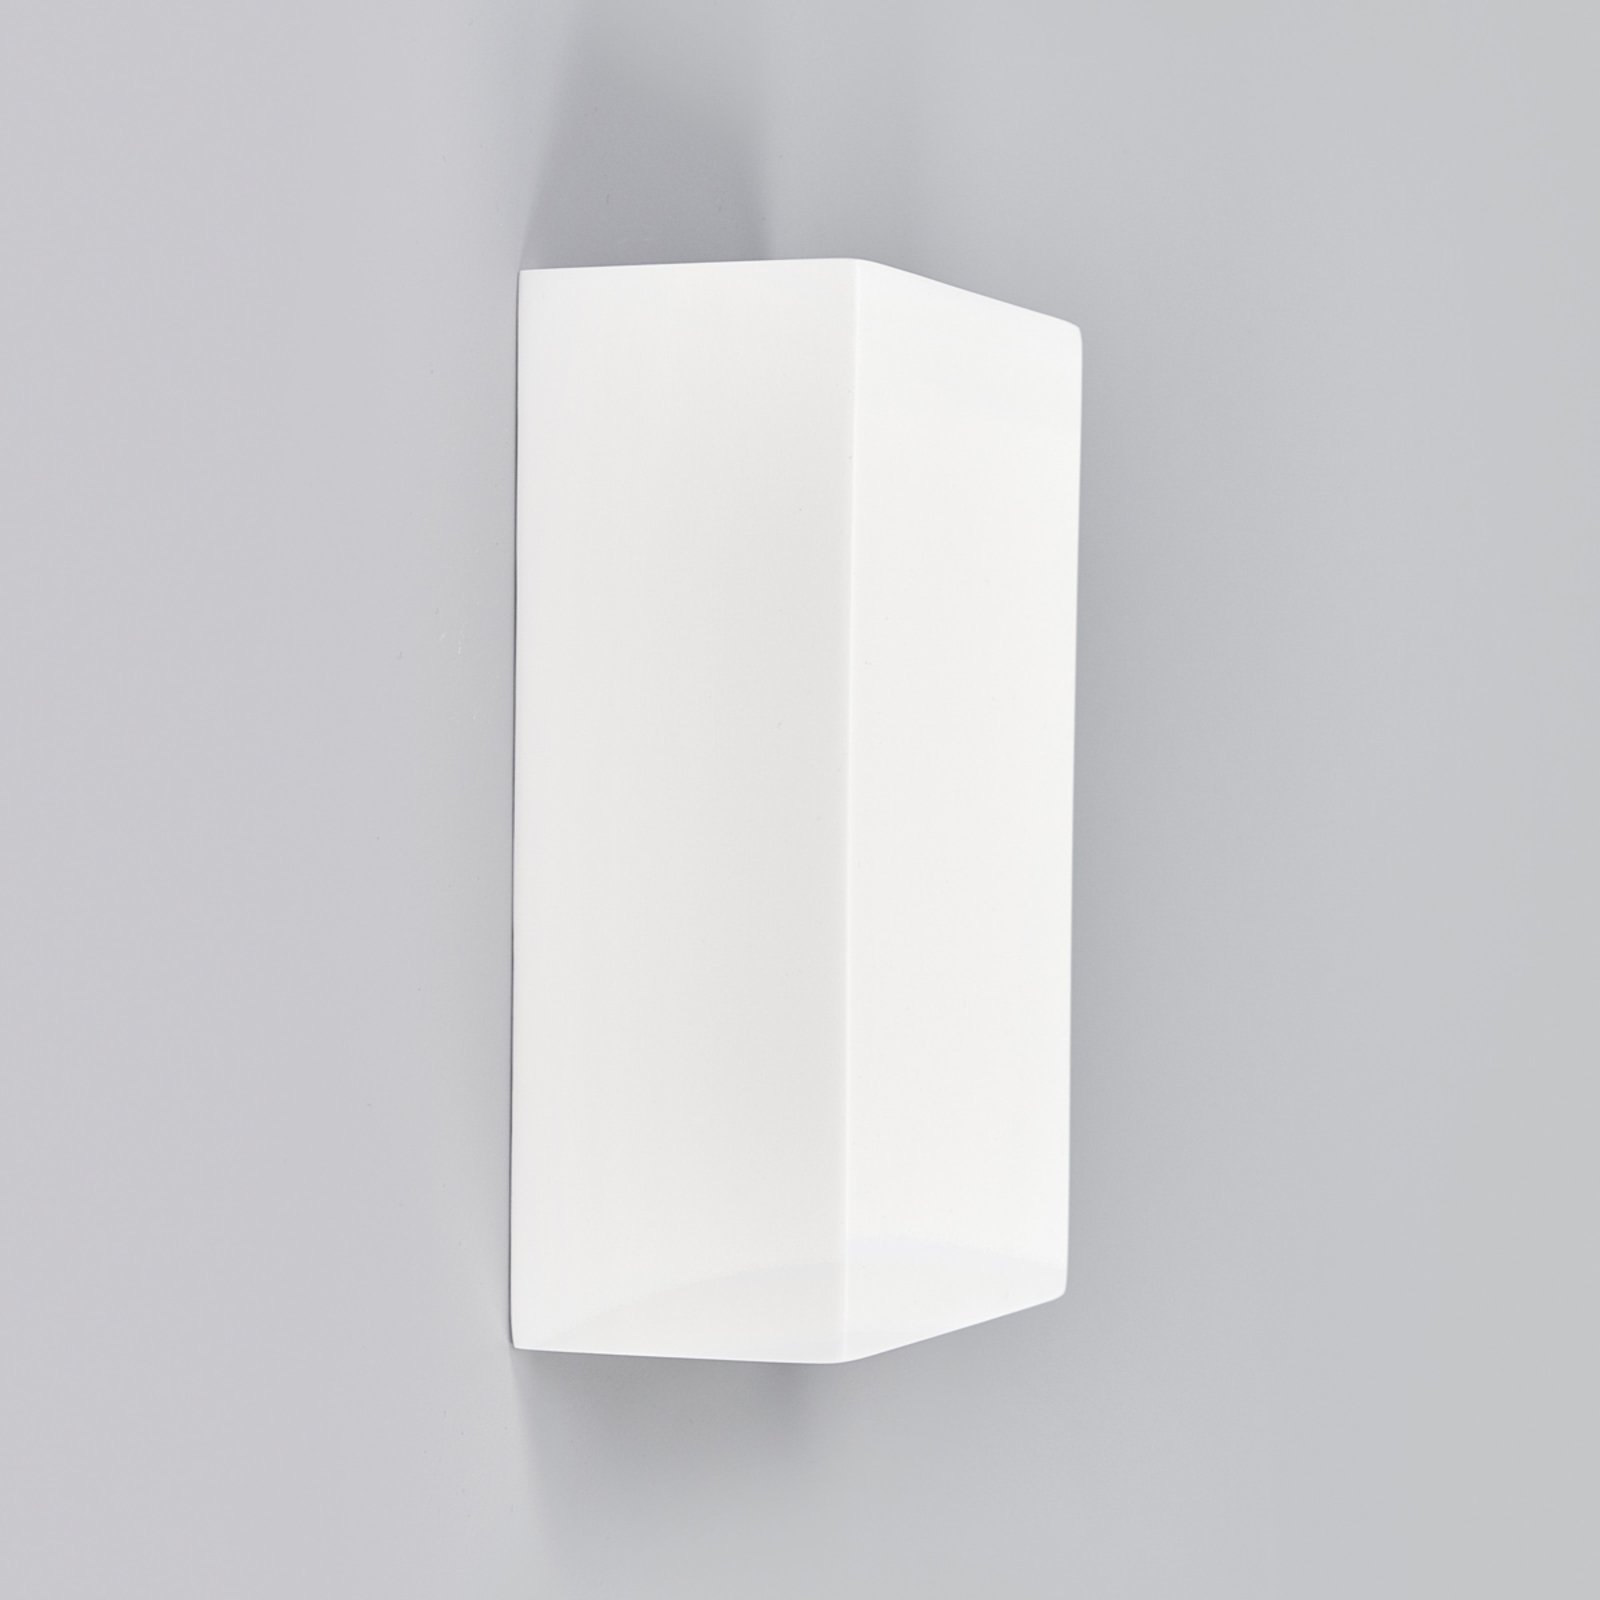 Fabiola LED wall light, plaster, height 16 cm